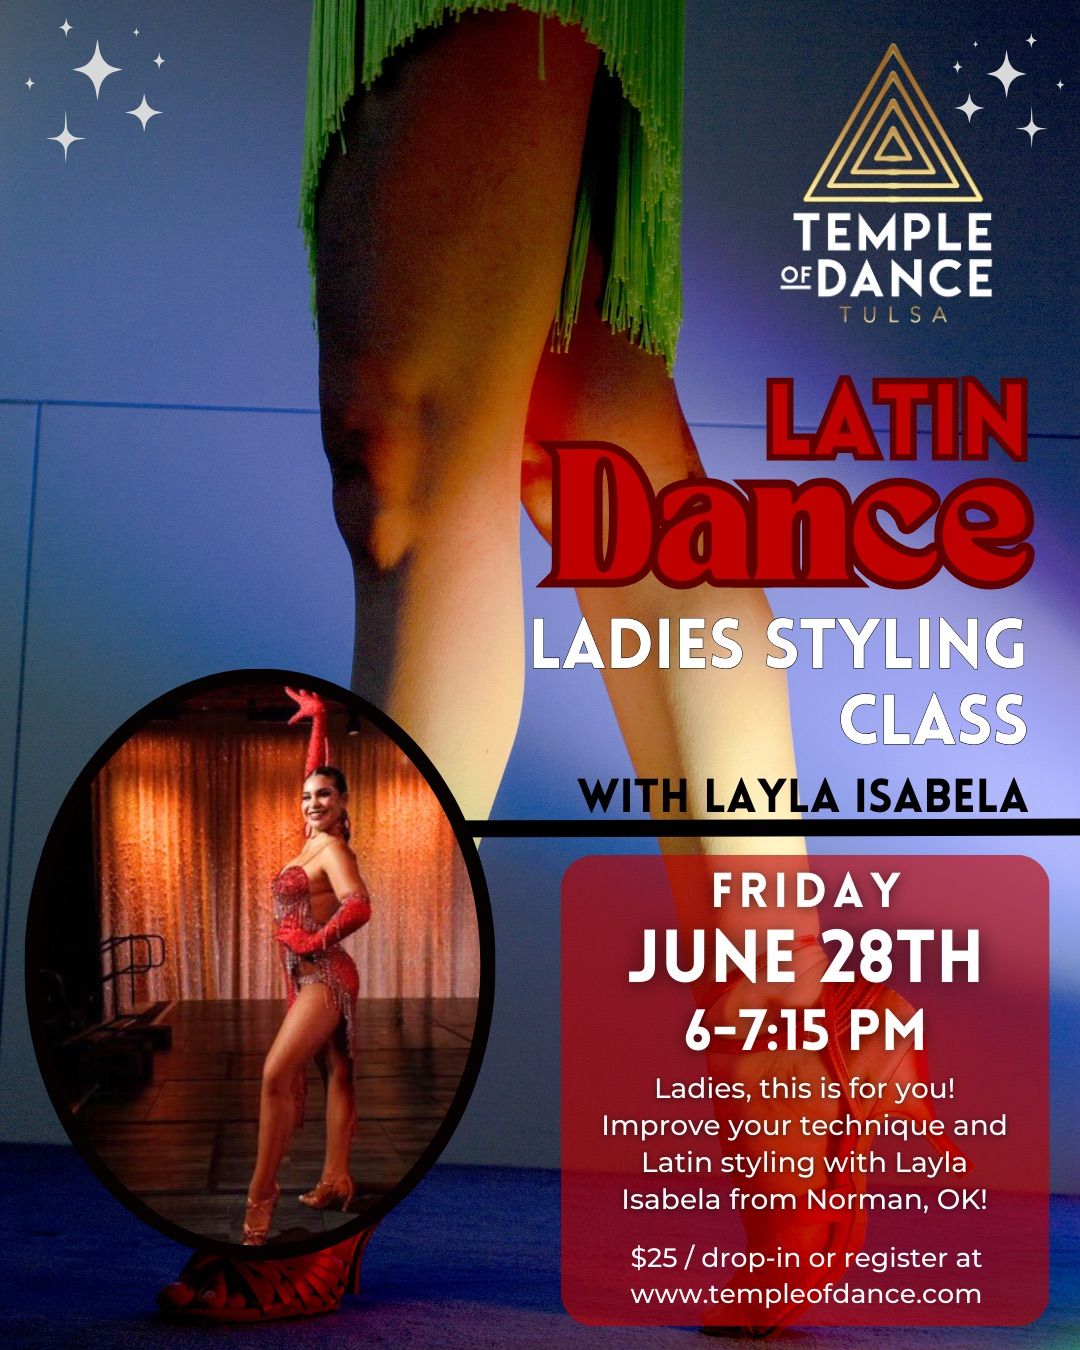 Ladies Latin Styling Class with Layla Isabela